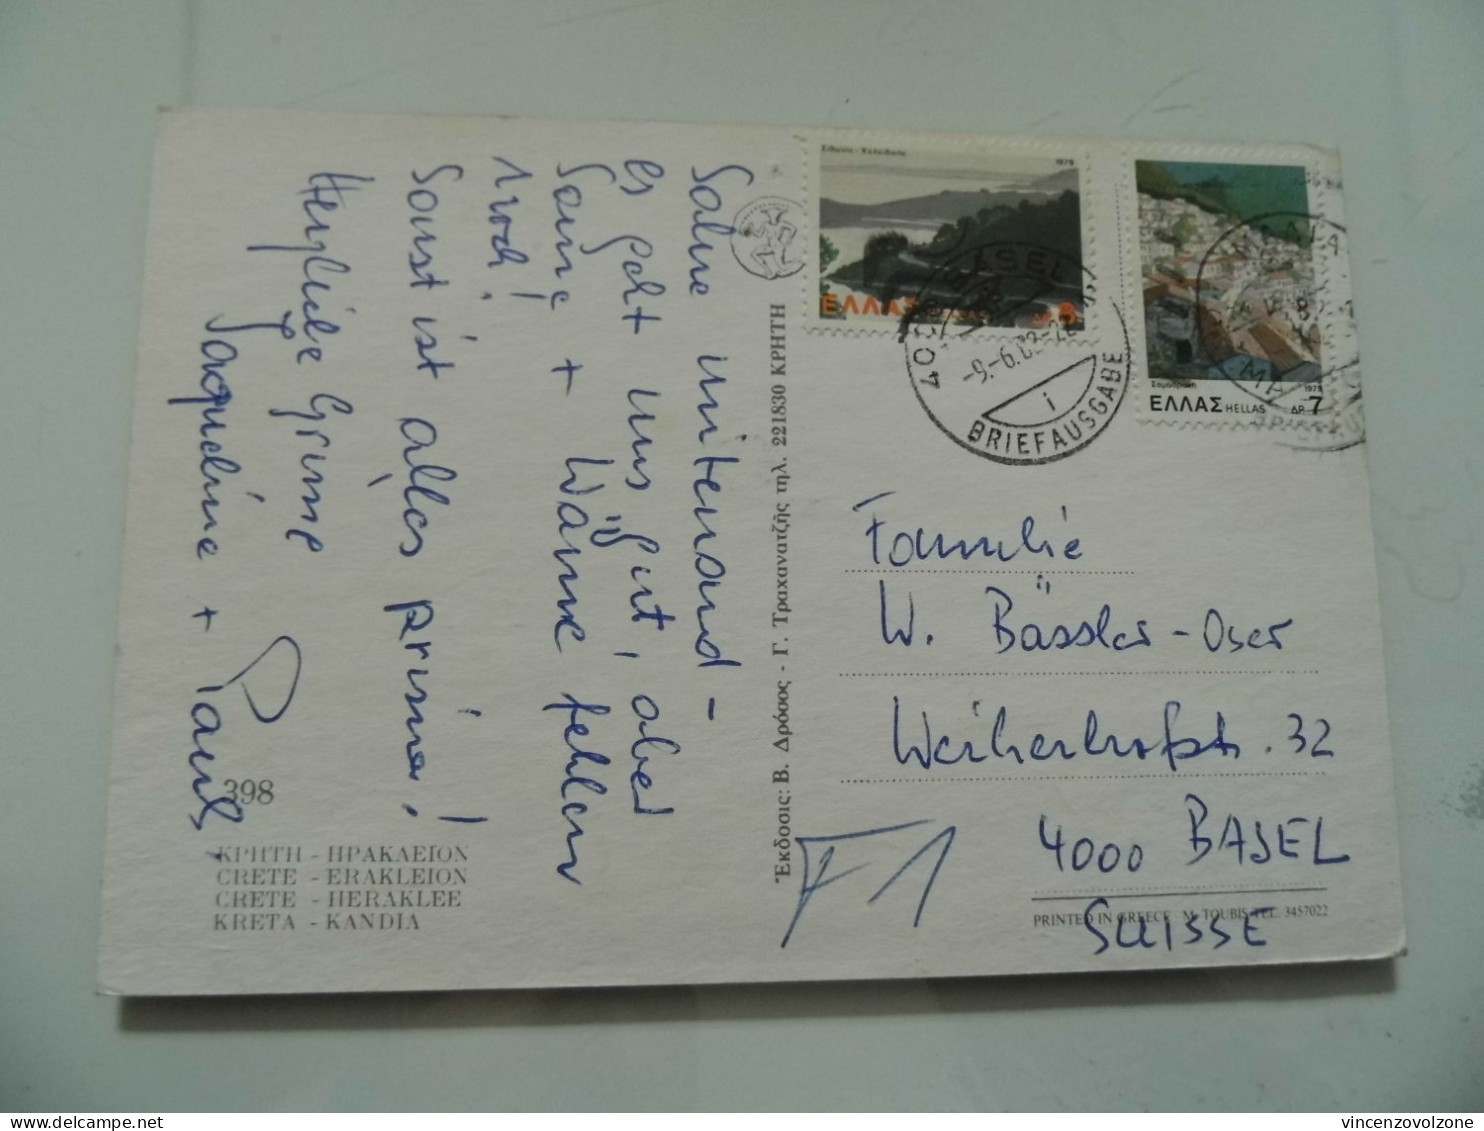 Cartolina Viaggiata "SOUVENIR FRON HERAKLEION" Vedutine 1987 - Grecia